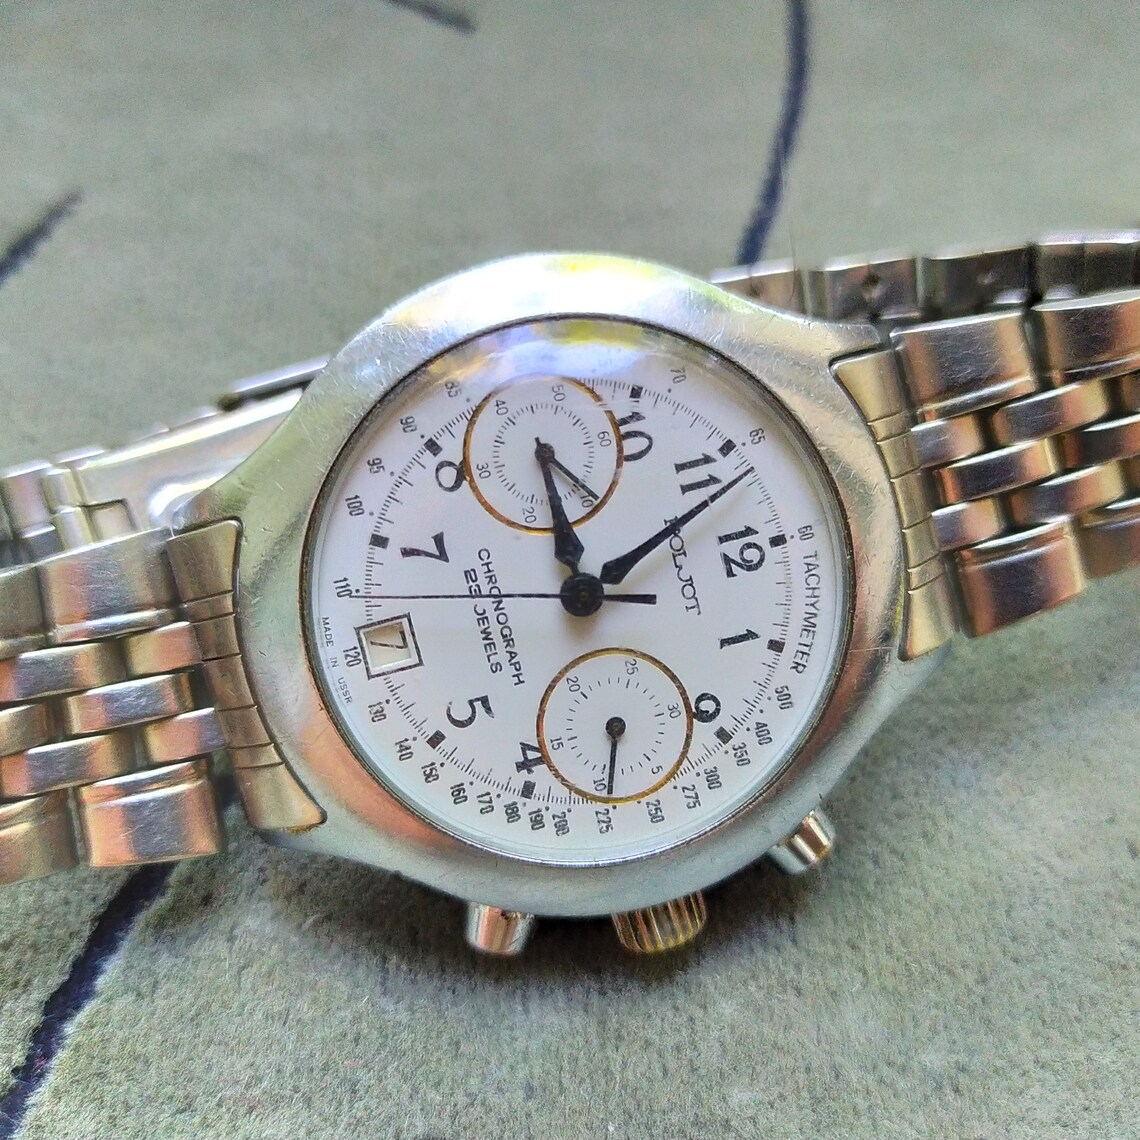 Wrist Watch POLJOT Chronograph STURMANSKIE 3133 23 Jewels Made - Etsy